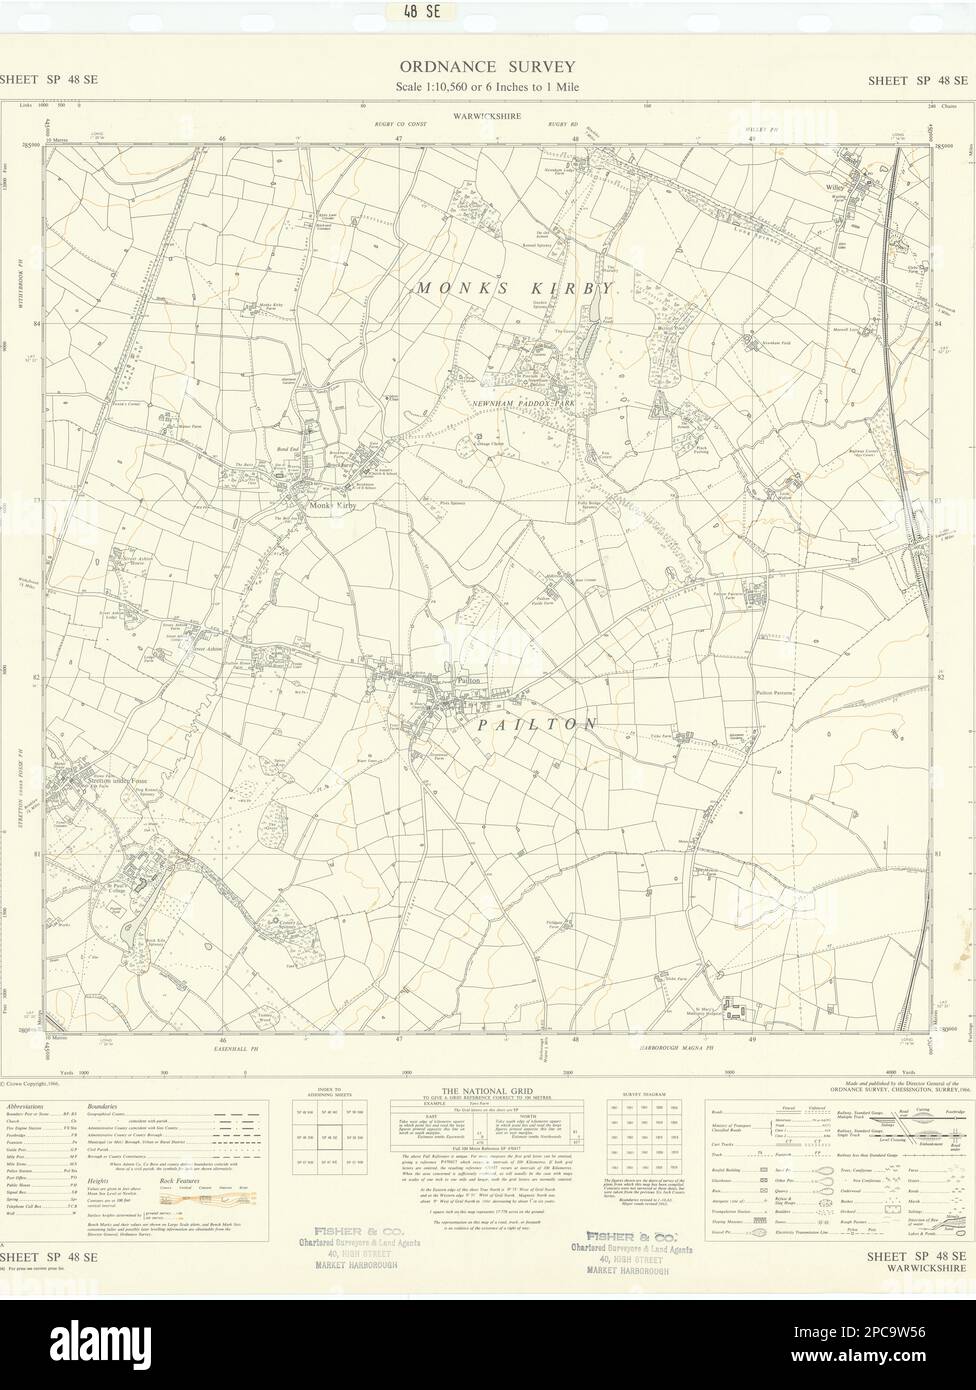 Ordnance Survey SP48SE Warks Pailton Monks Kirby Stretton under Fosse 1966 map Stock Photo